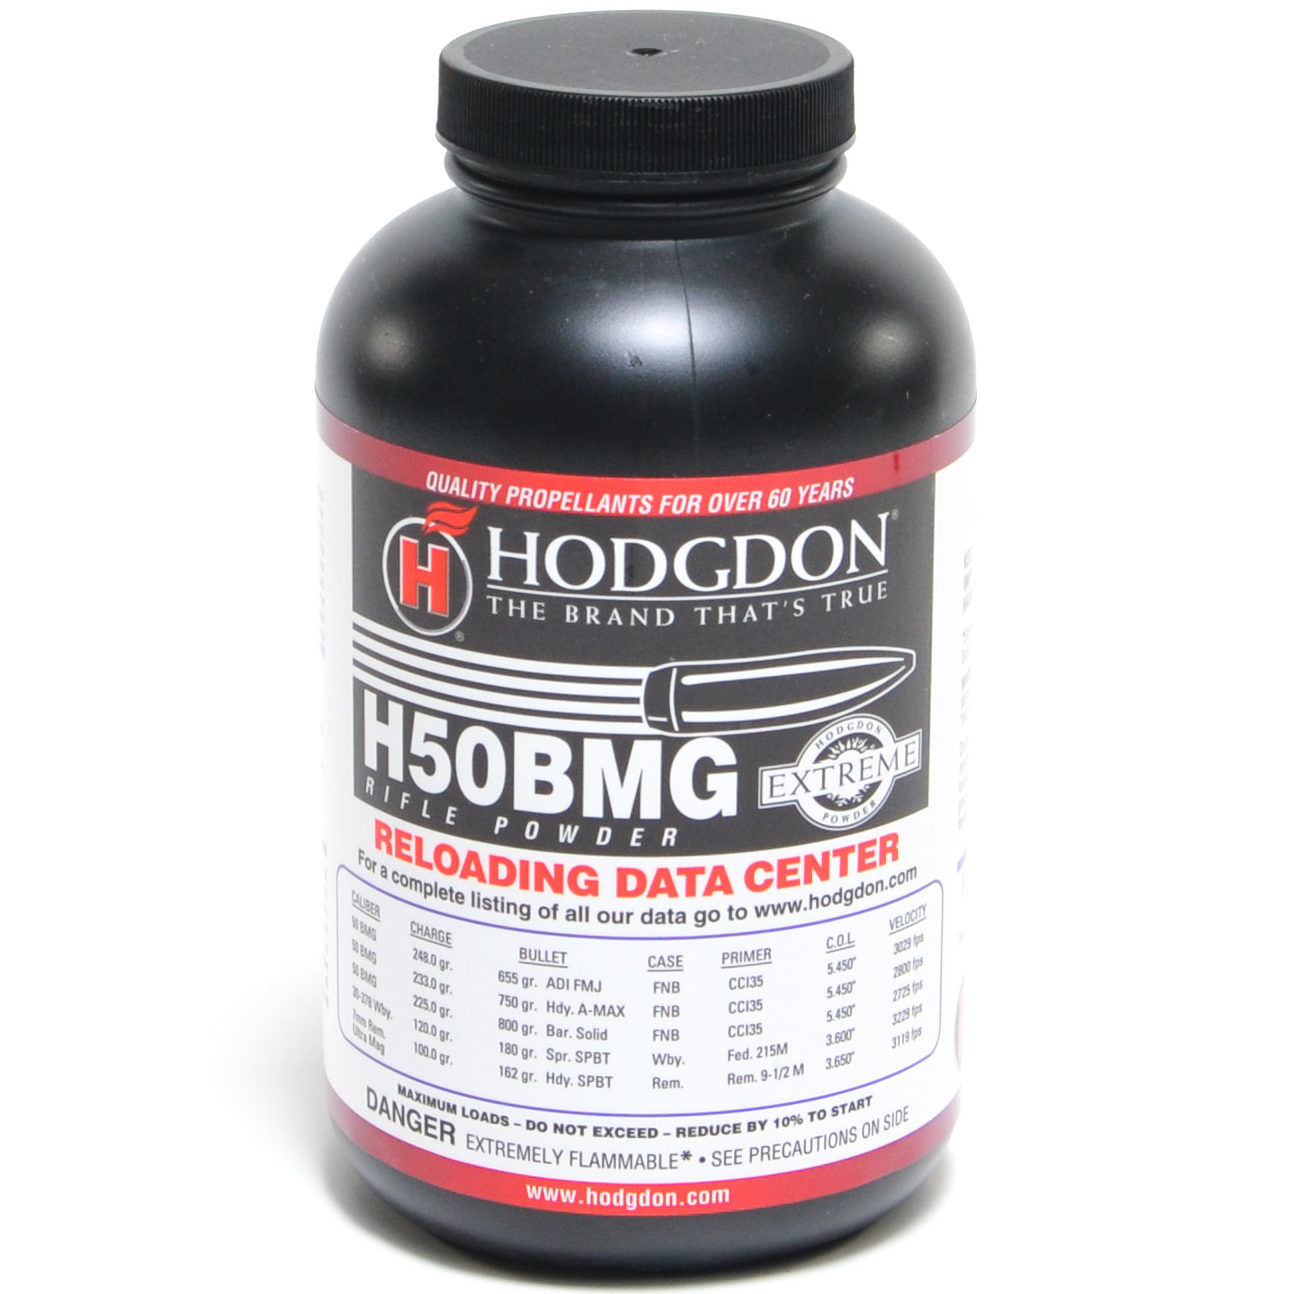 Hodgdon H50BMG - Powder Valley 50 BMG Powder